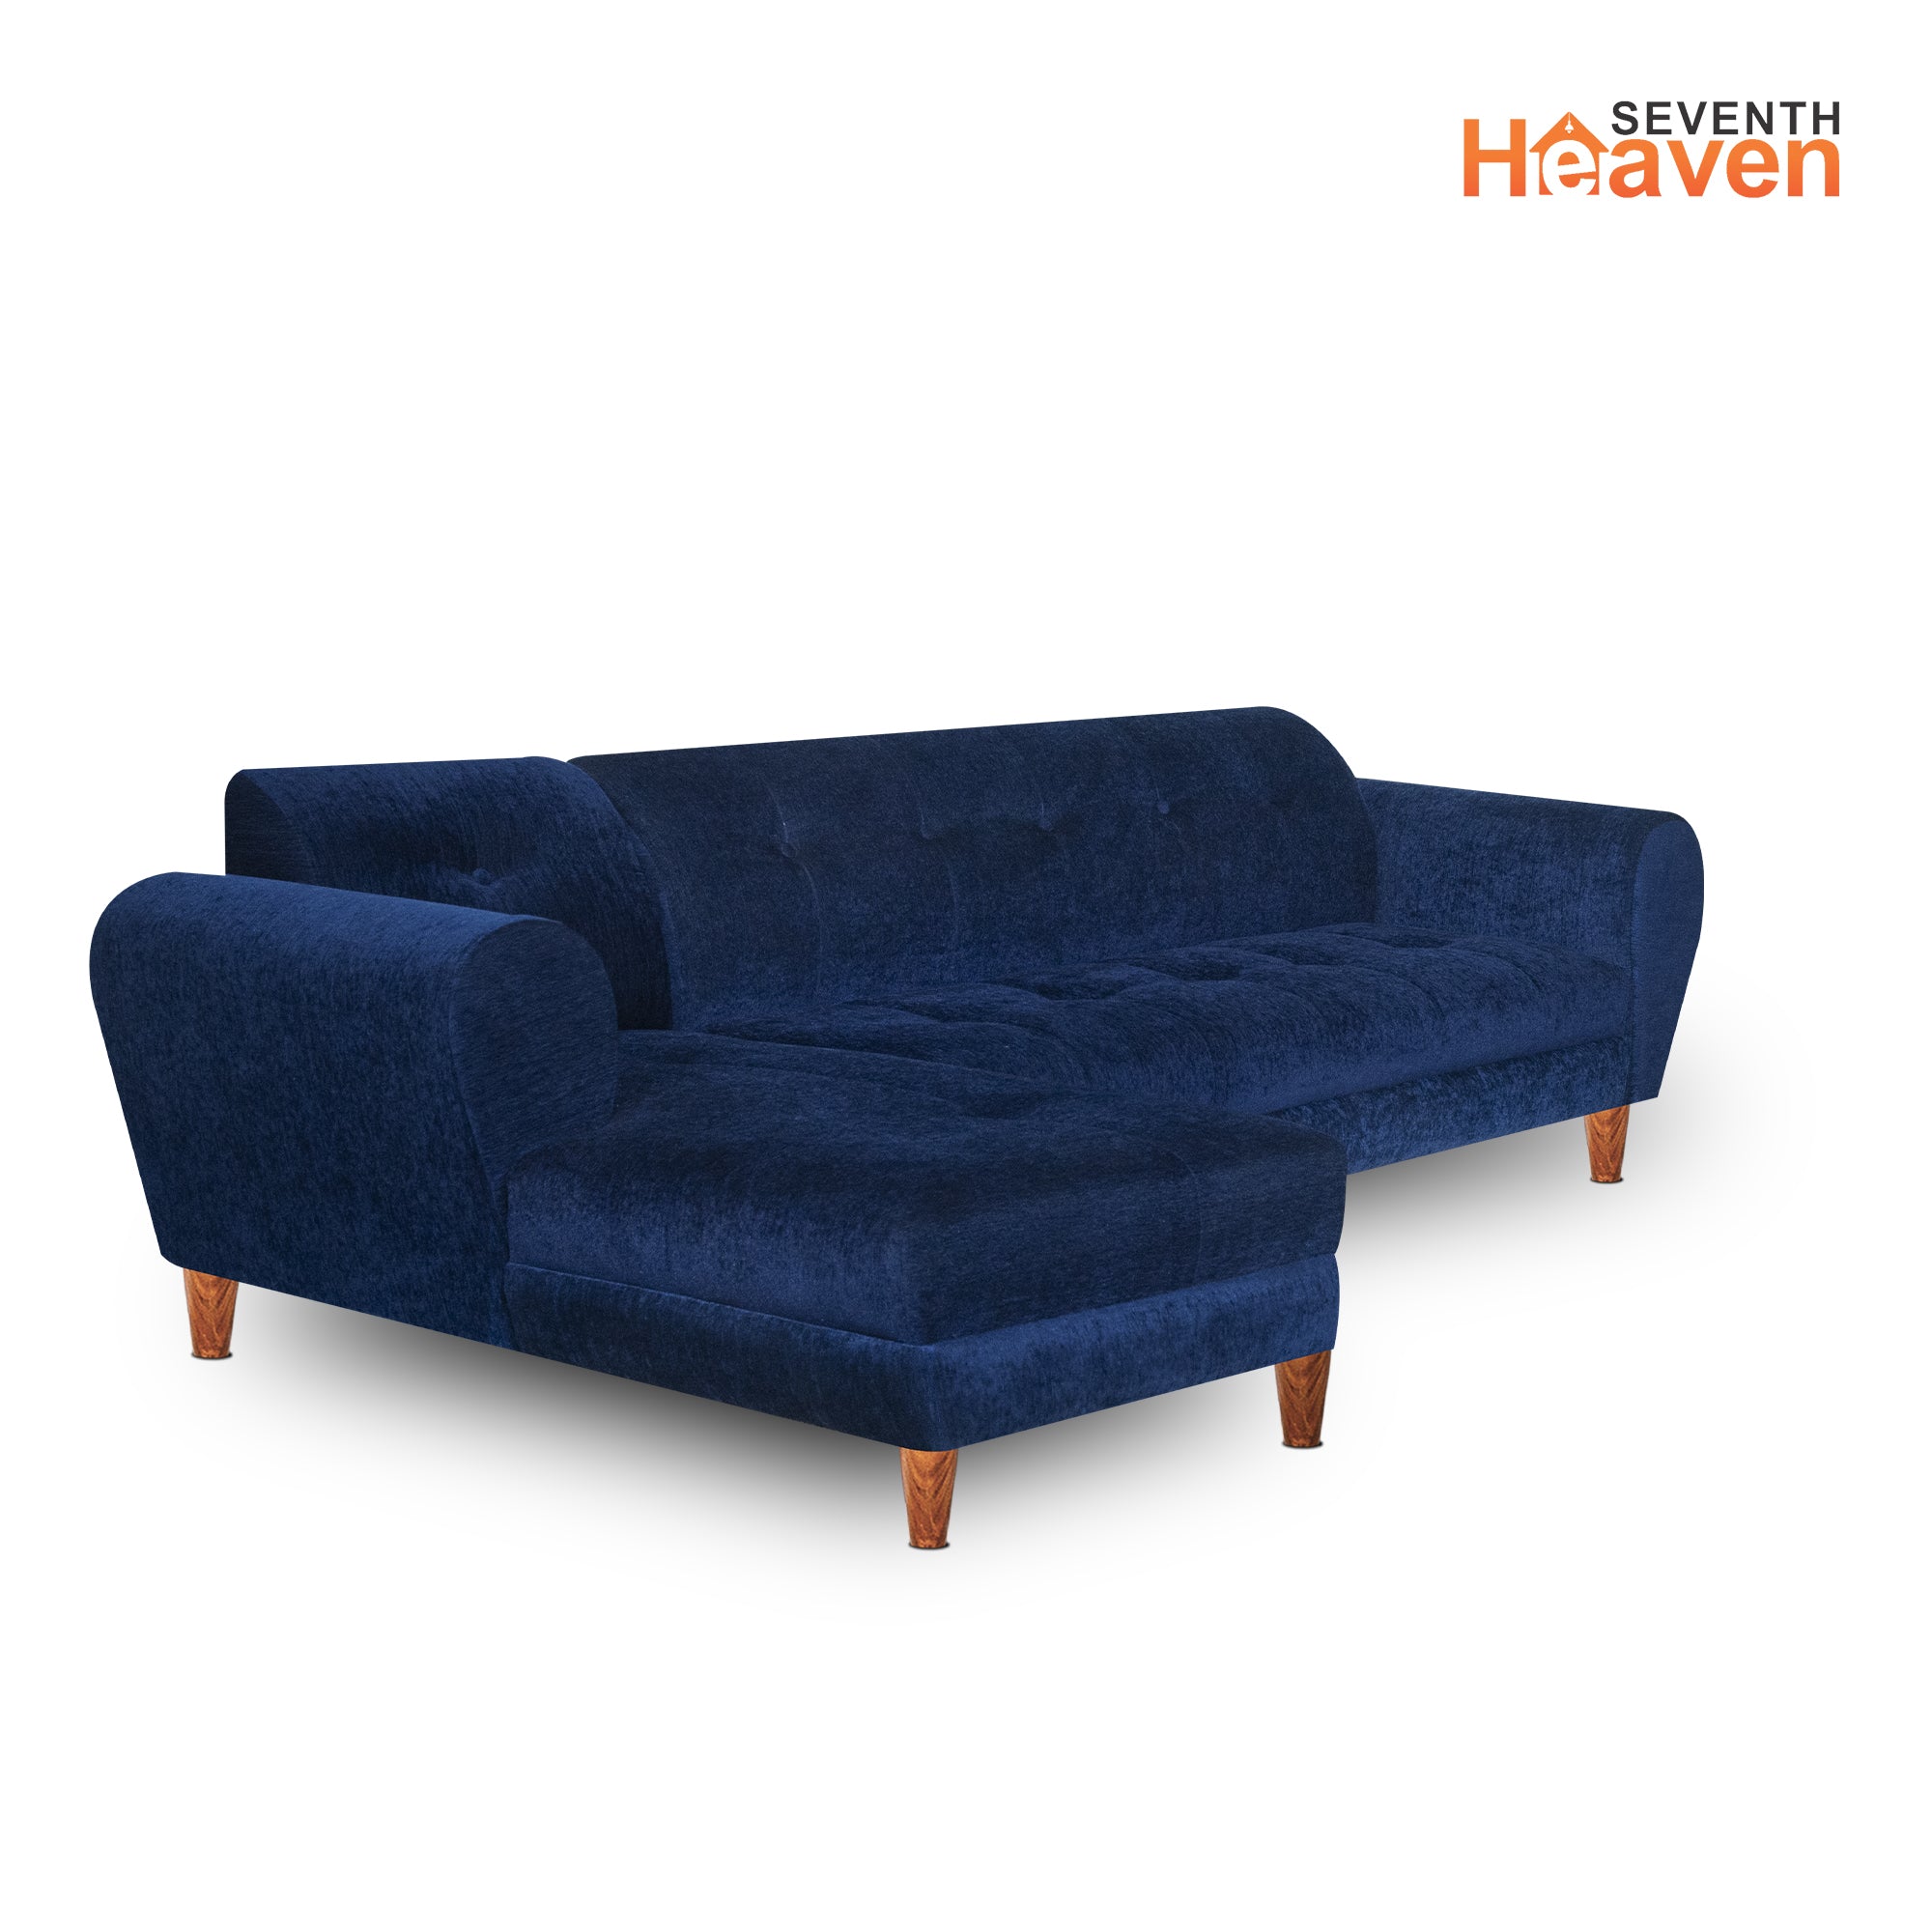 Seventh Heaven Milan 6 Seater Sofa, Extra Spacious, Chenille Molfino Fabric: 3 Year Warranty Fabric 6 Seater Sofa  (Finish Color - Blue, DIY(Do-It-Yourself))